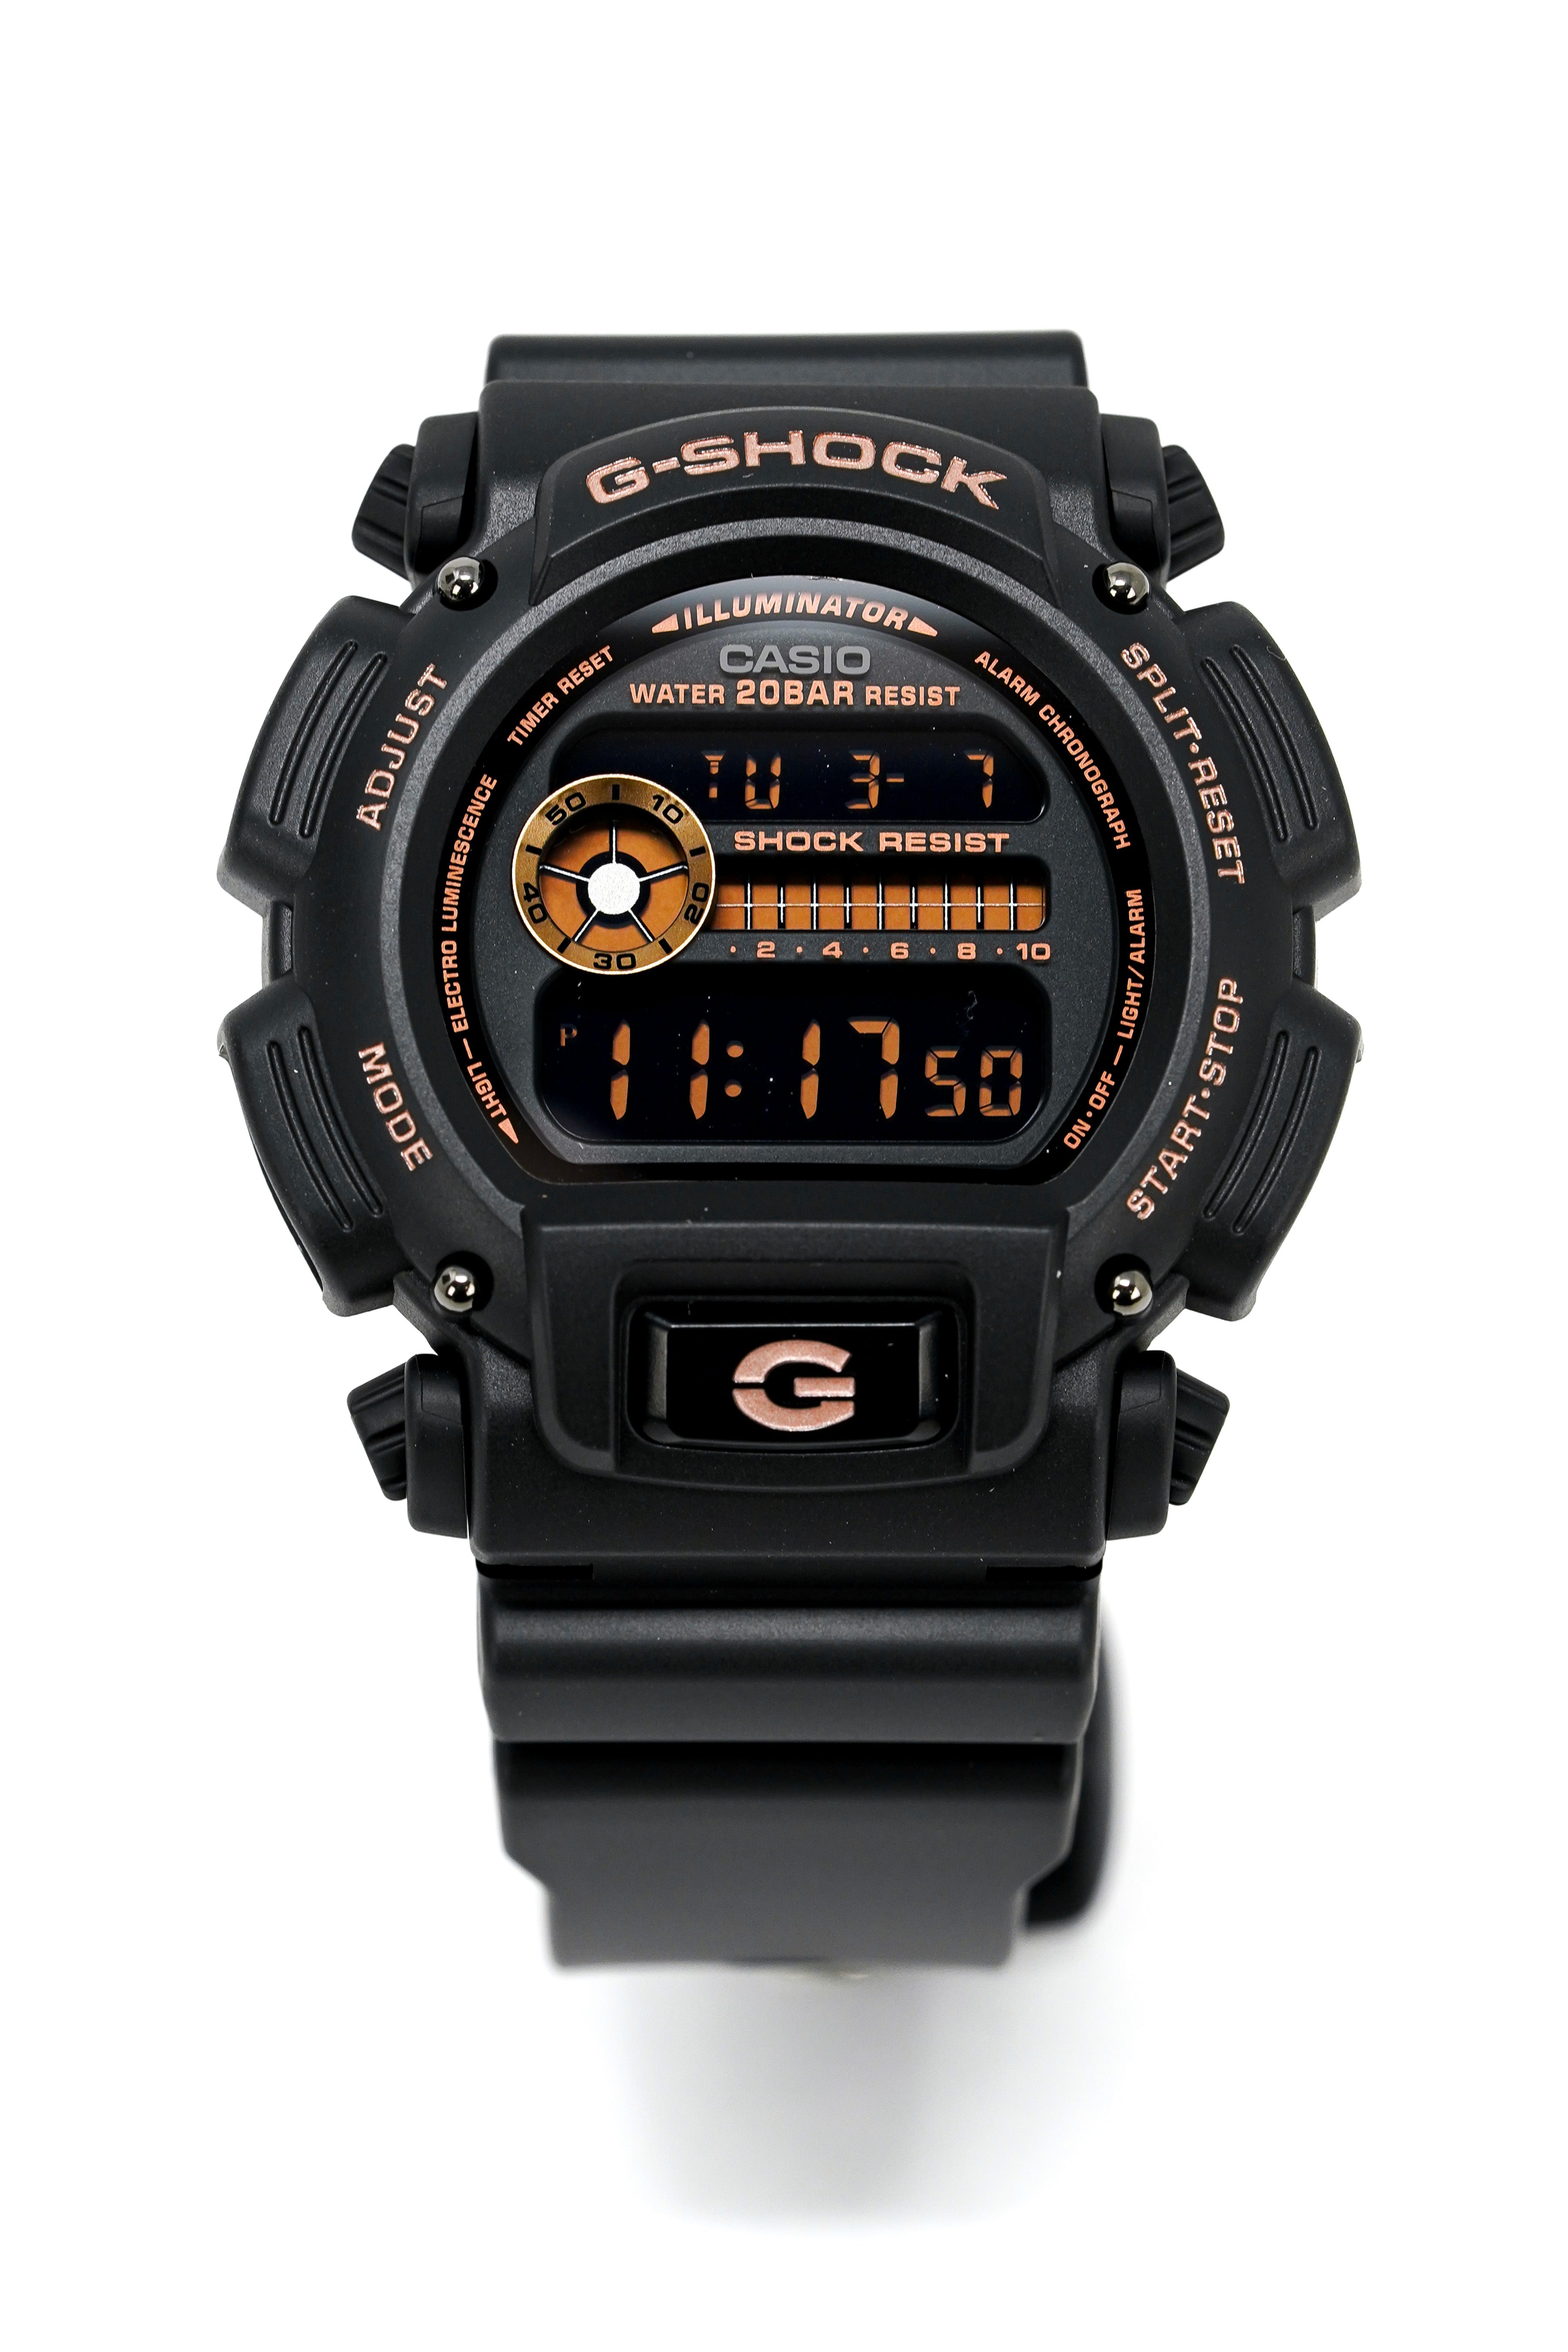 Casio G-Shock Watch Men's Big Case Black DW-9052GBX-1A4DR